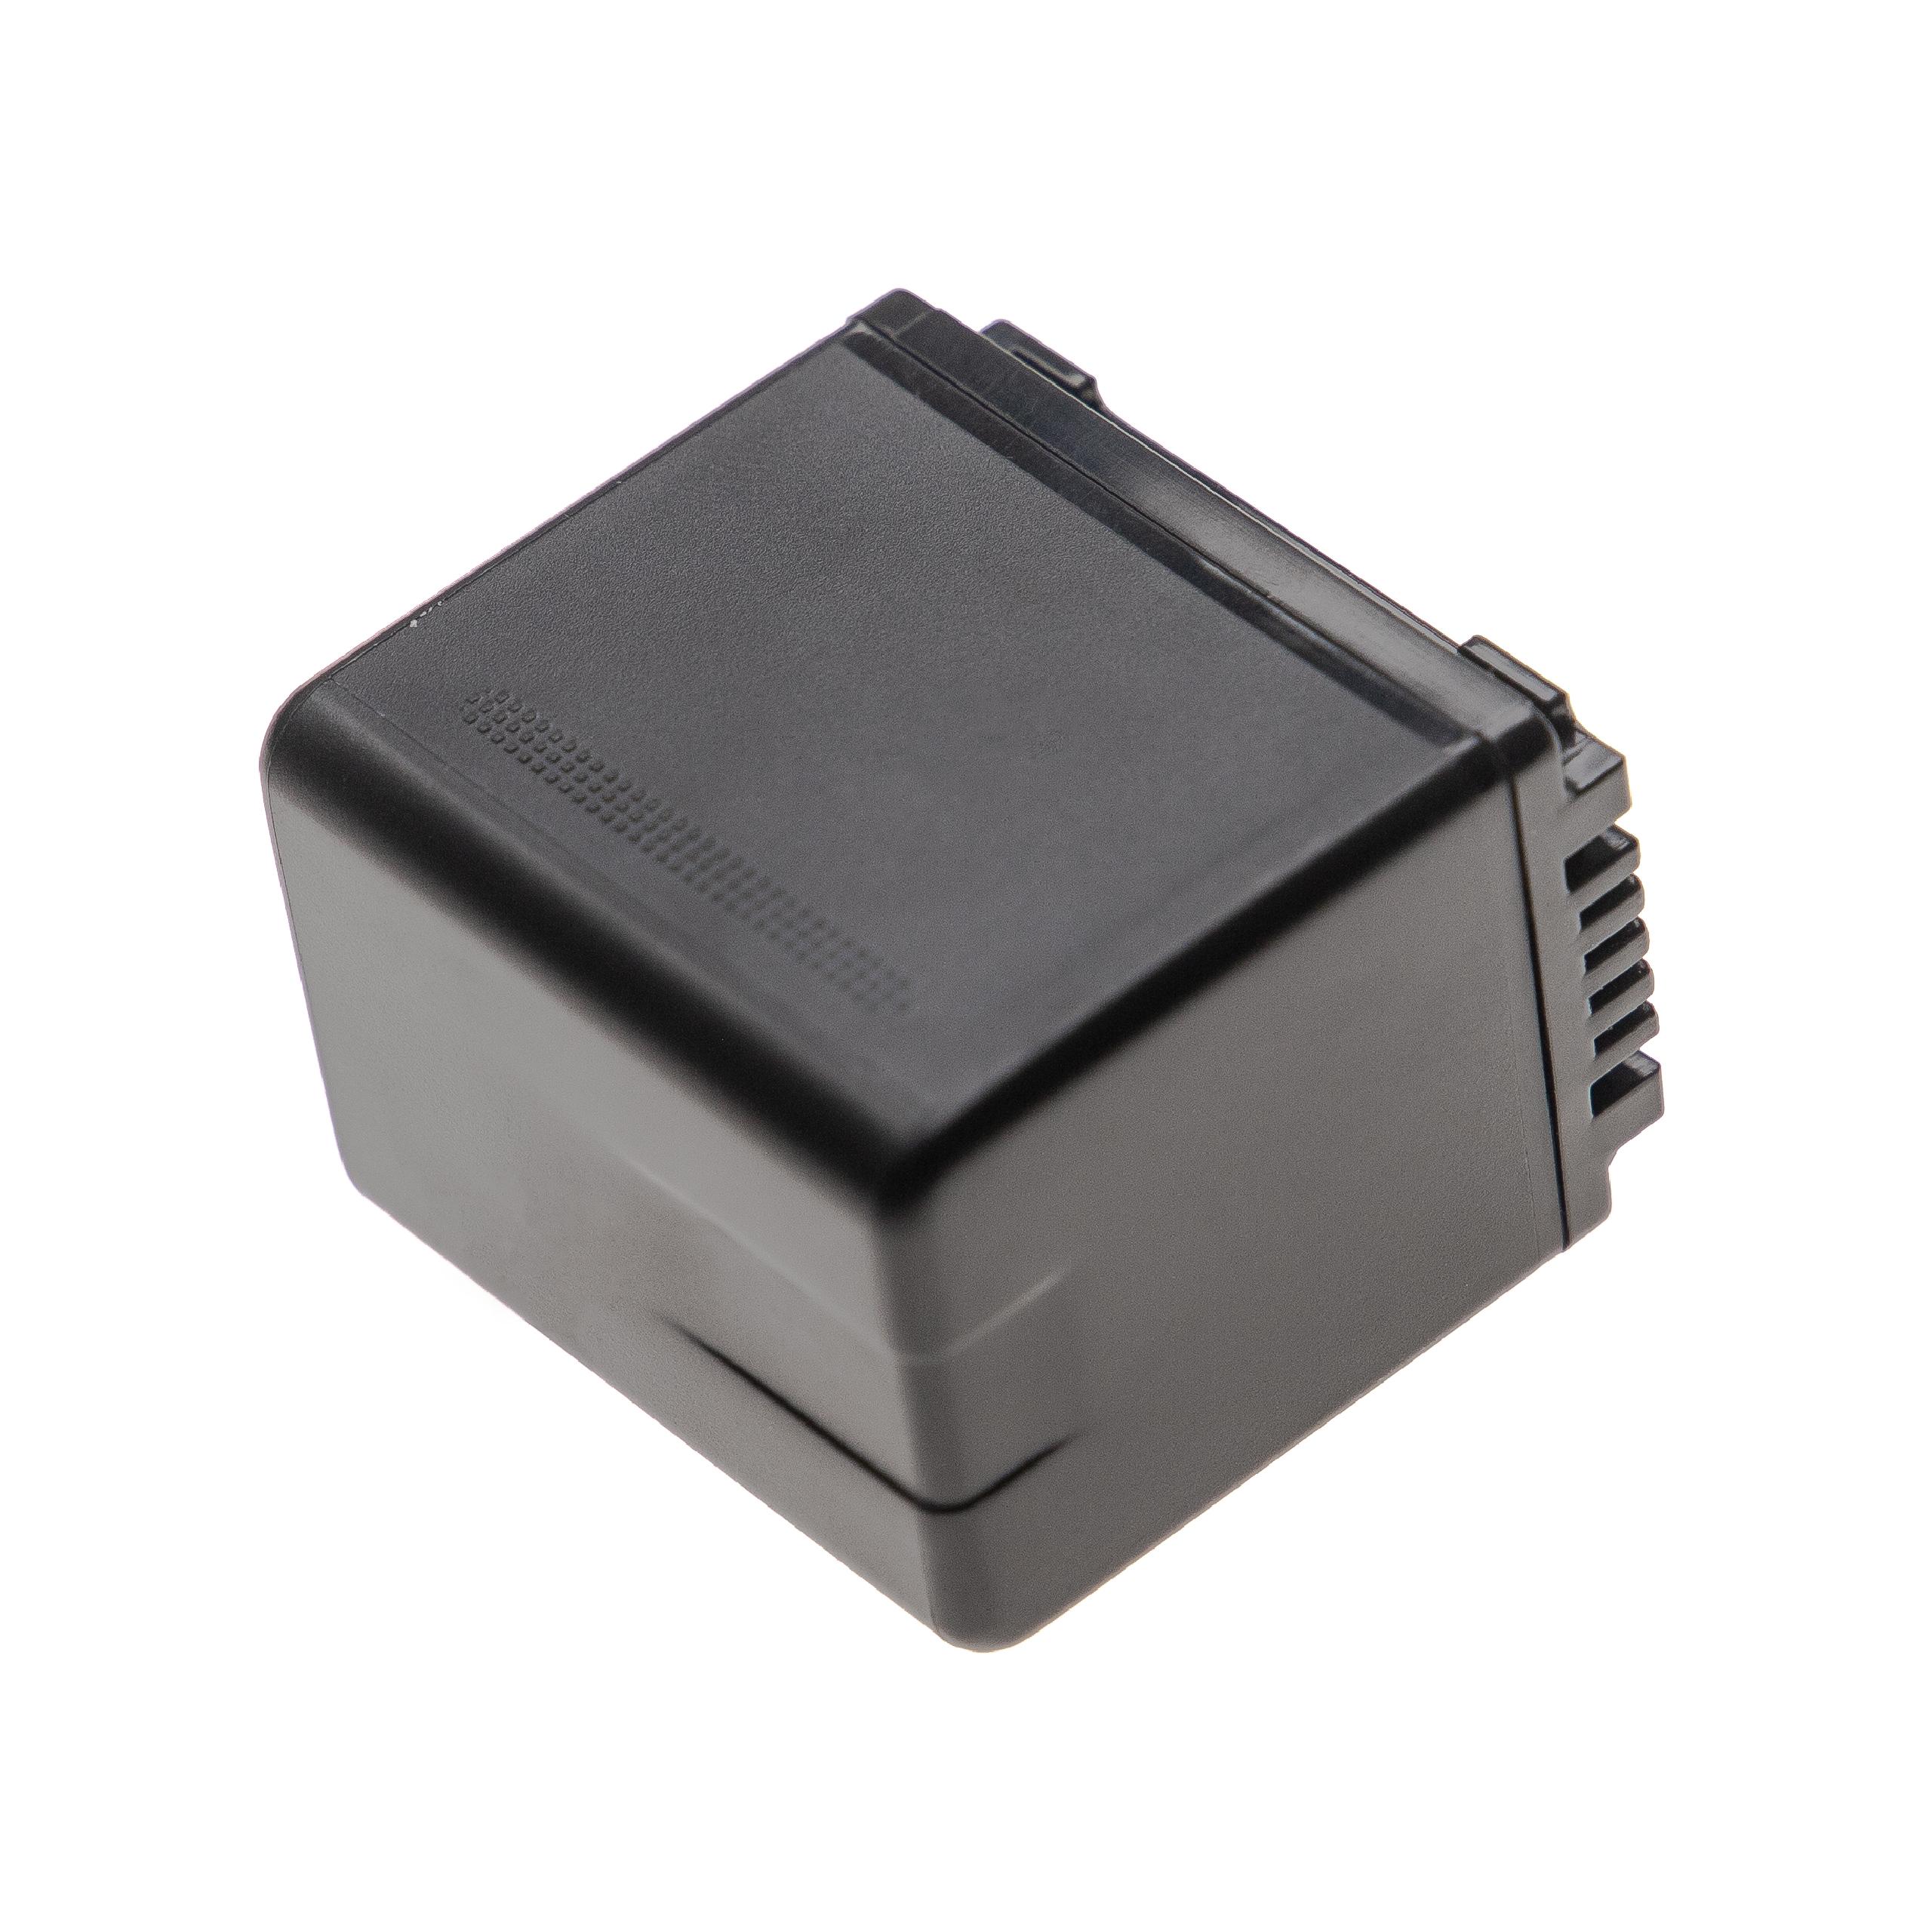 Akumulator do kamery cyfrowej / wideo zamiennik Panasonic VW-VBK180, VW-VBK360 - 4040 mAh 3,6 V Li-Ion